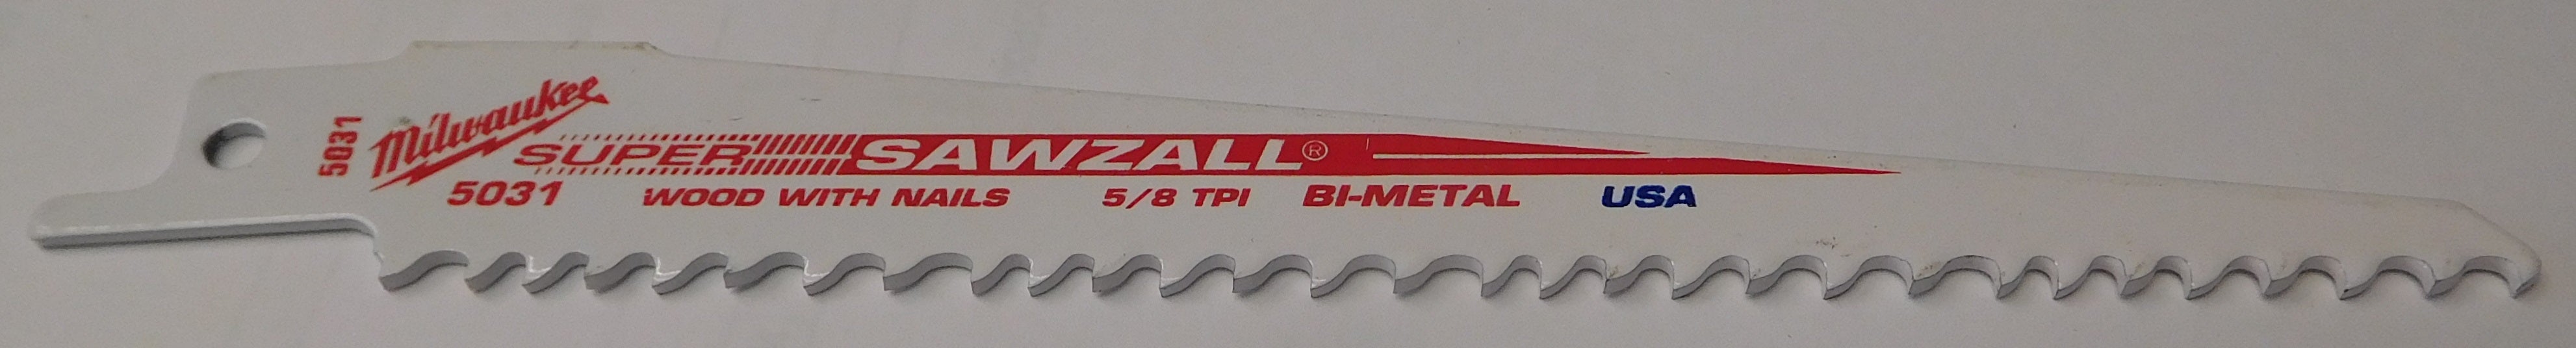 Milwaukee 5031 6" x 5/8 TPI Bi-Metal Wood With Nails Super Sawzall Blade USA (Office)